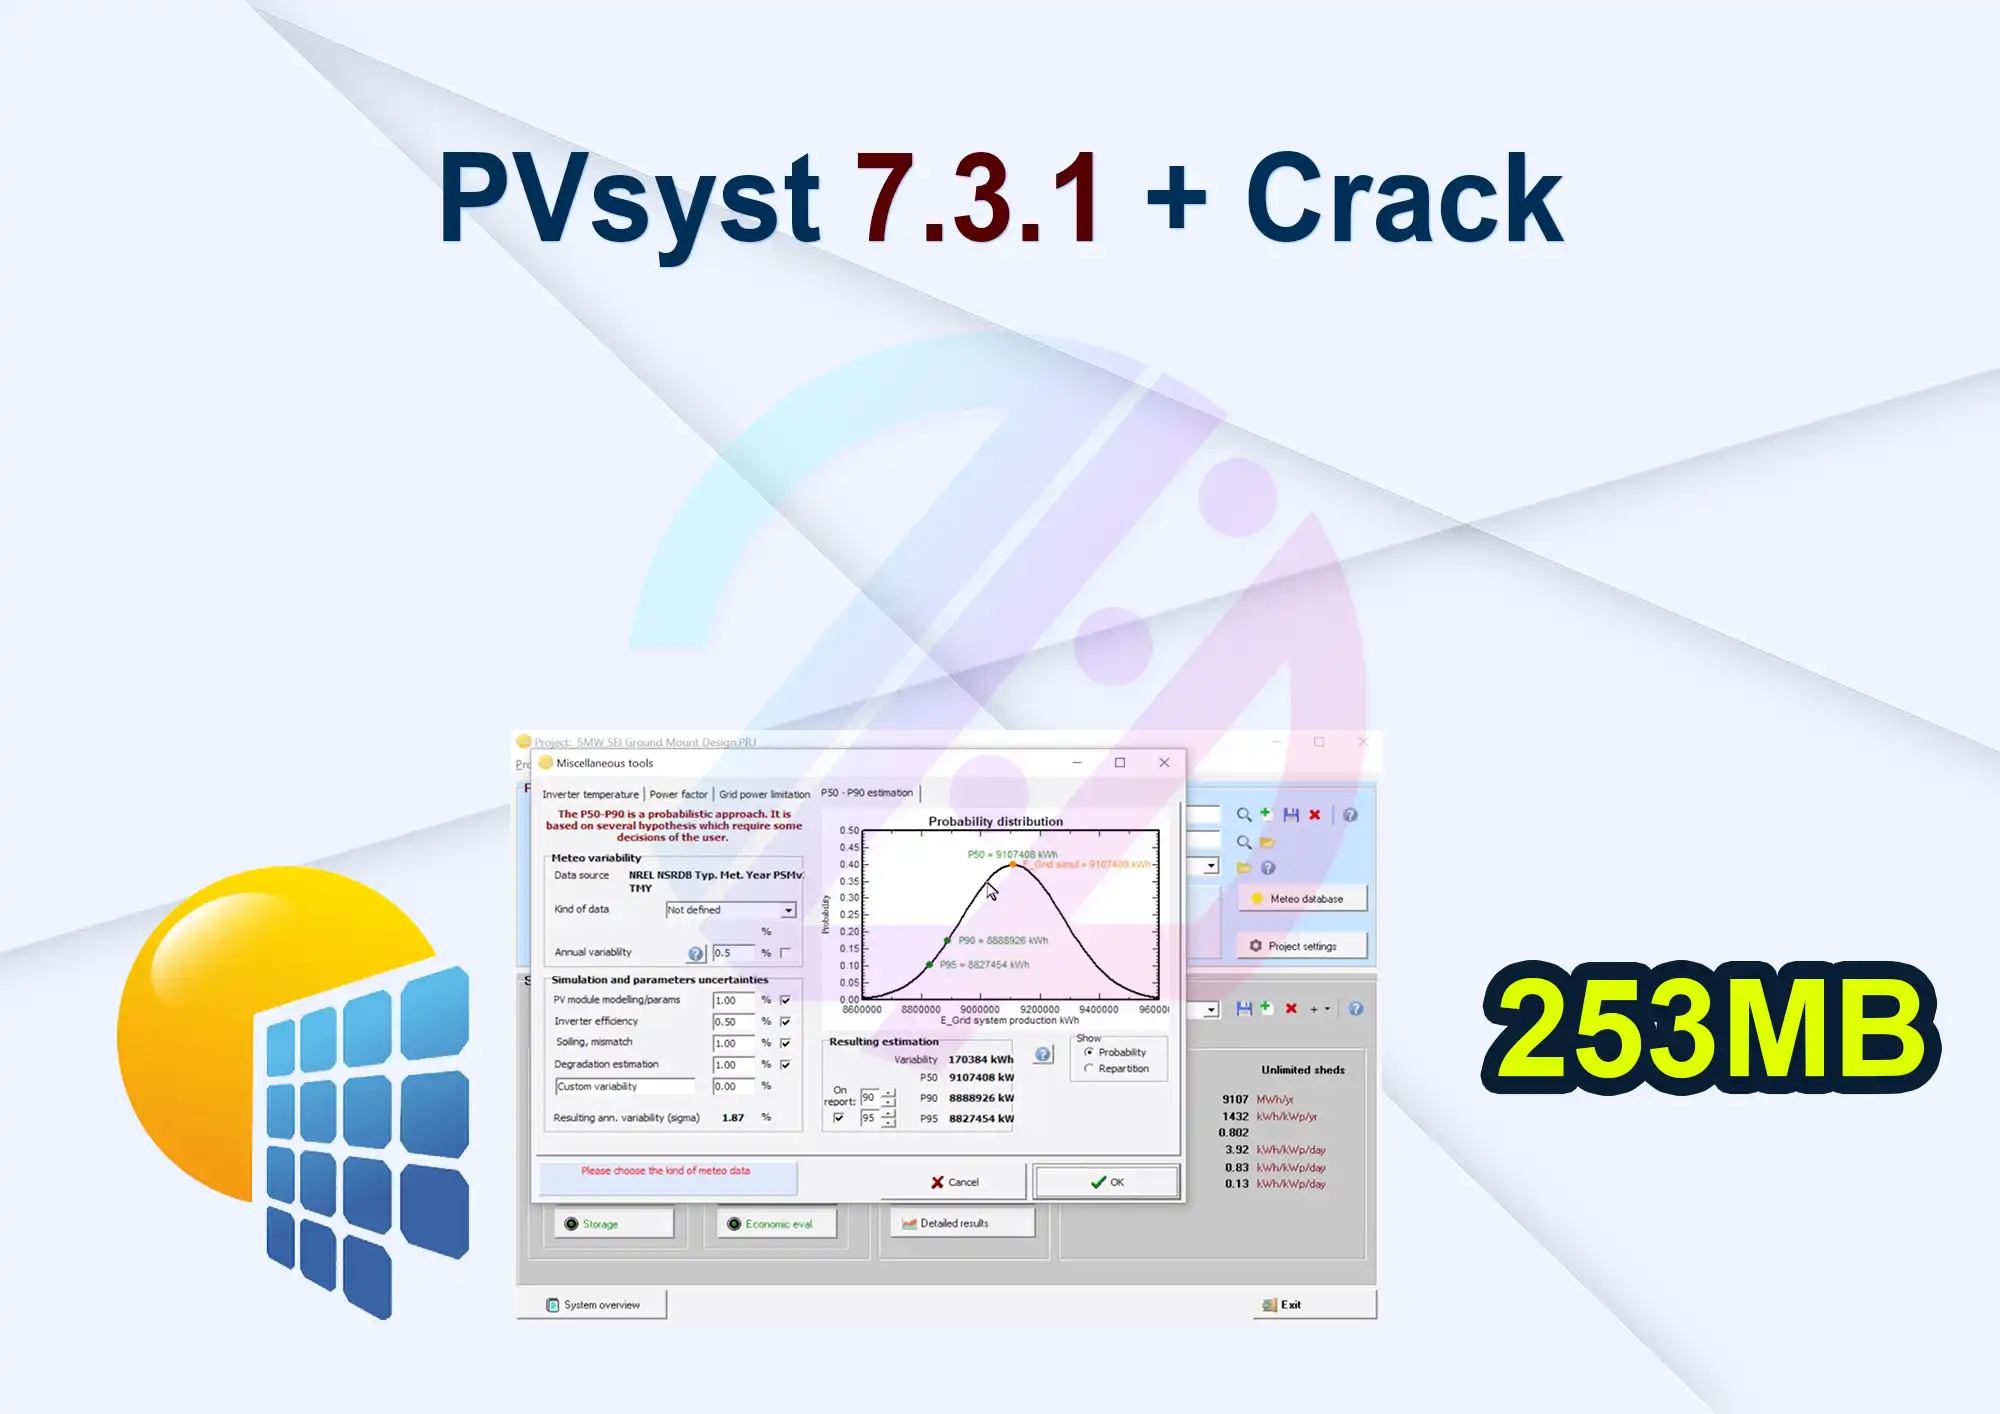 PVsyst 7.3.1 + Crack